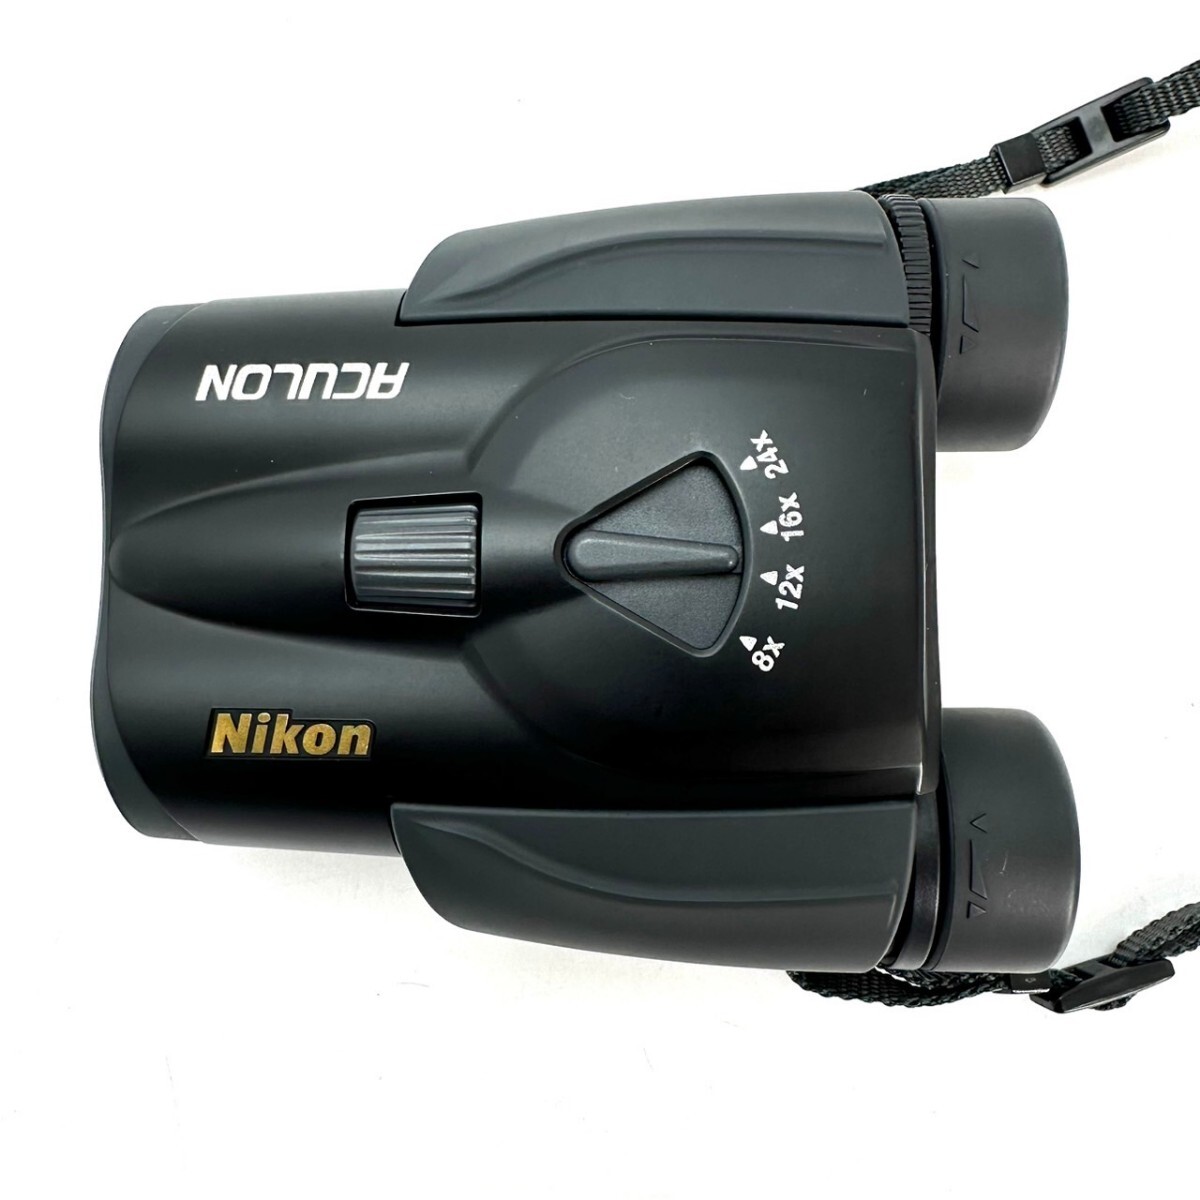 KA*1 jpy ~ binoculars Nikon Nikon ACULON T11 8-24×25 4.6° at 8x ZOOM strap lens cap case attaching 